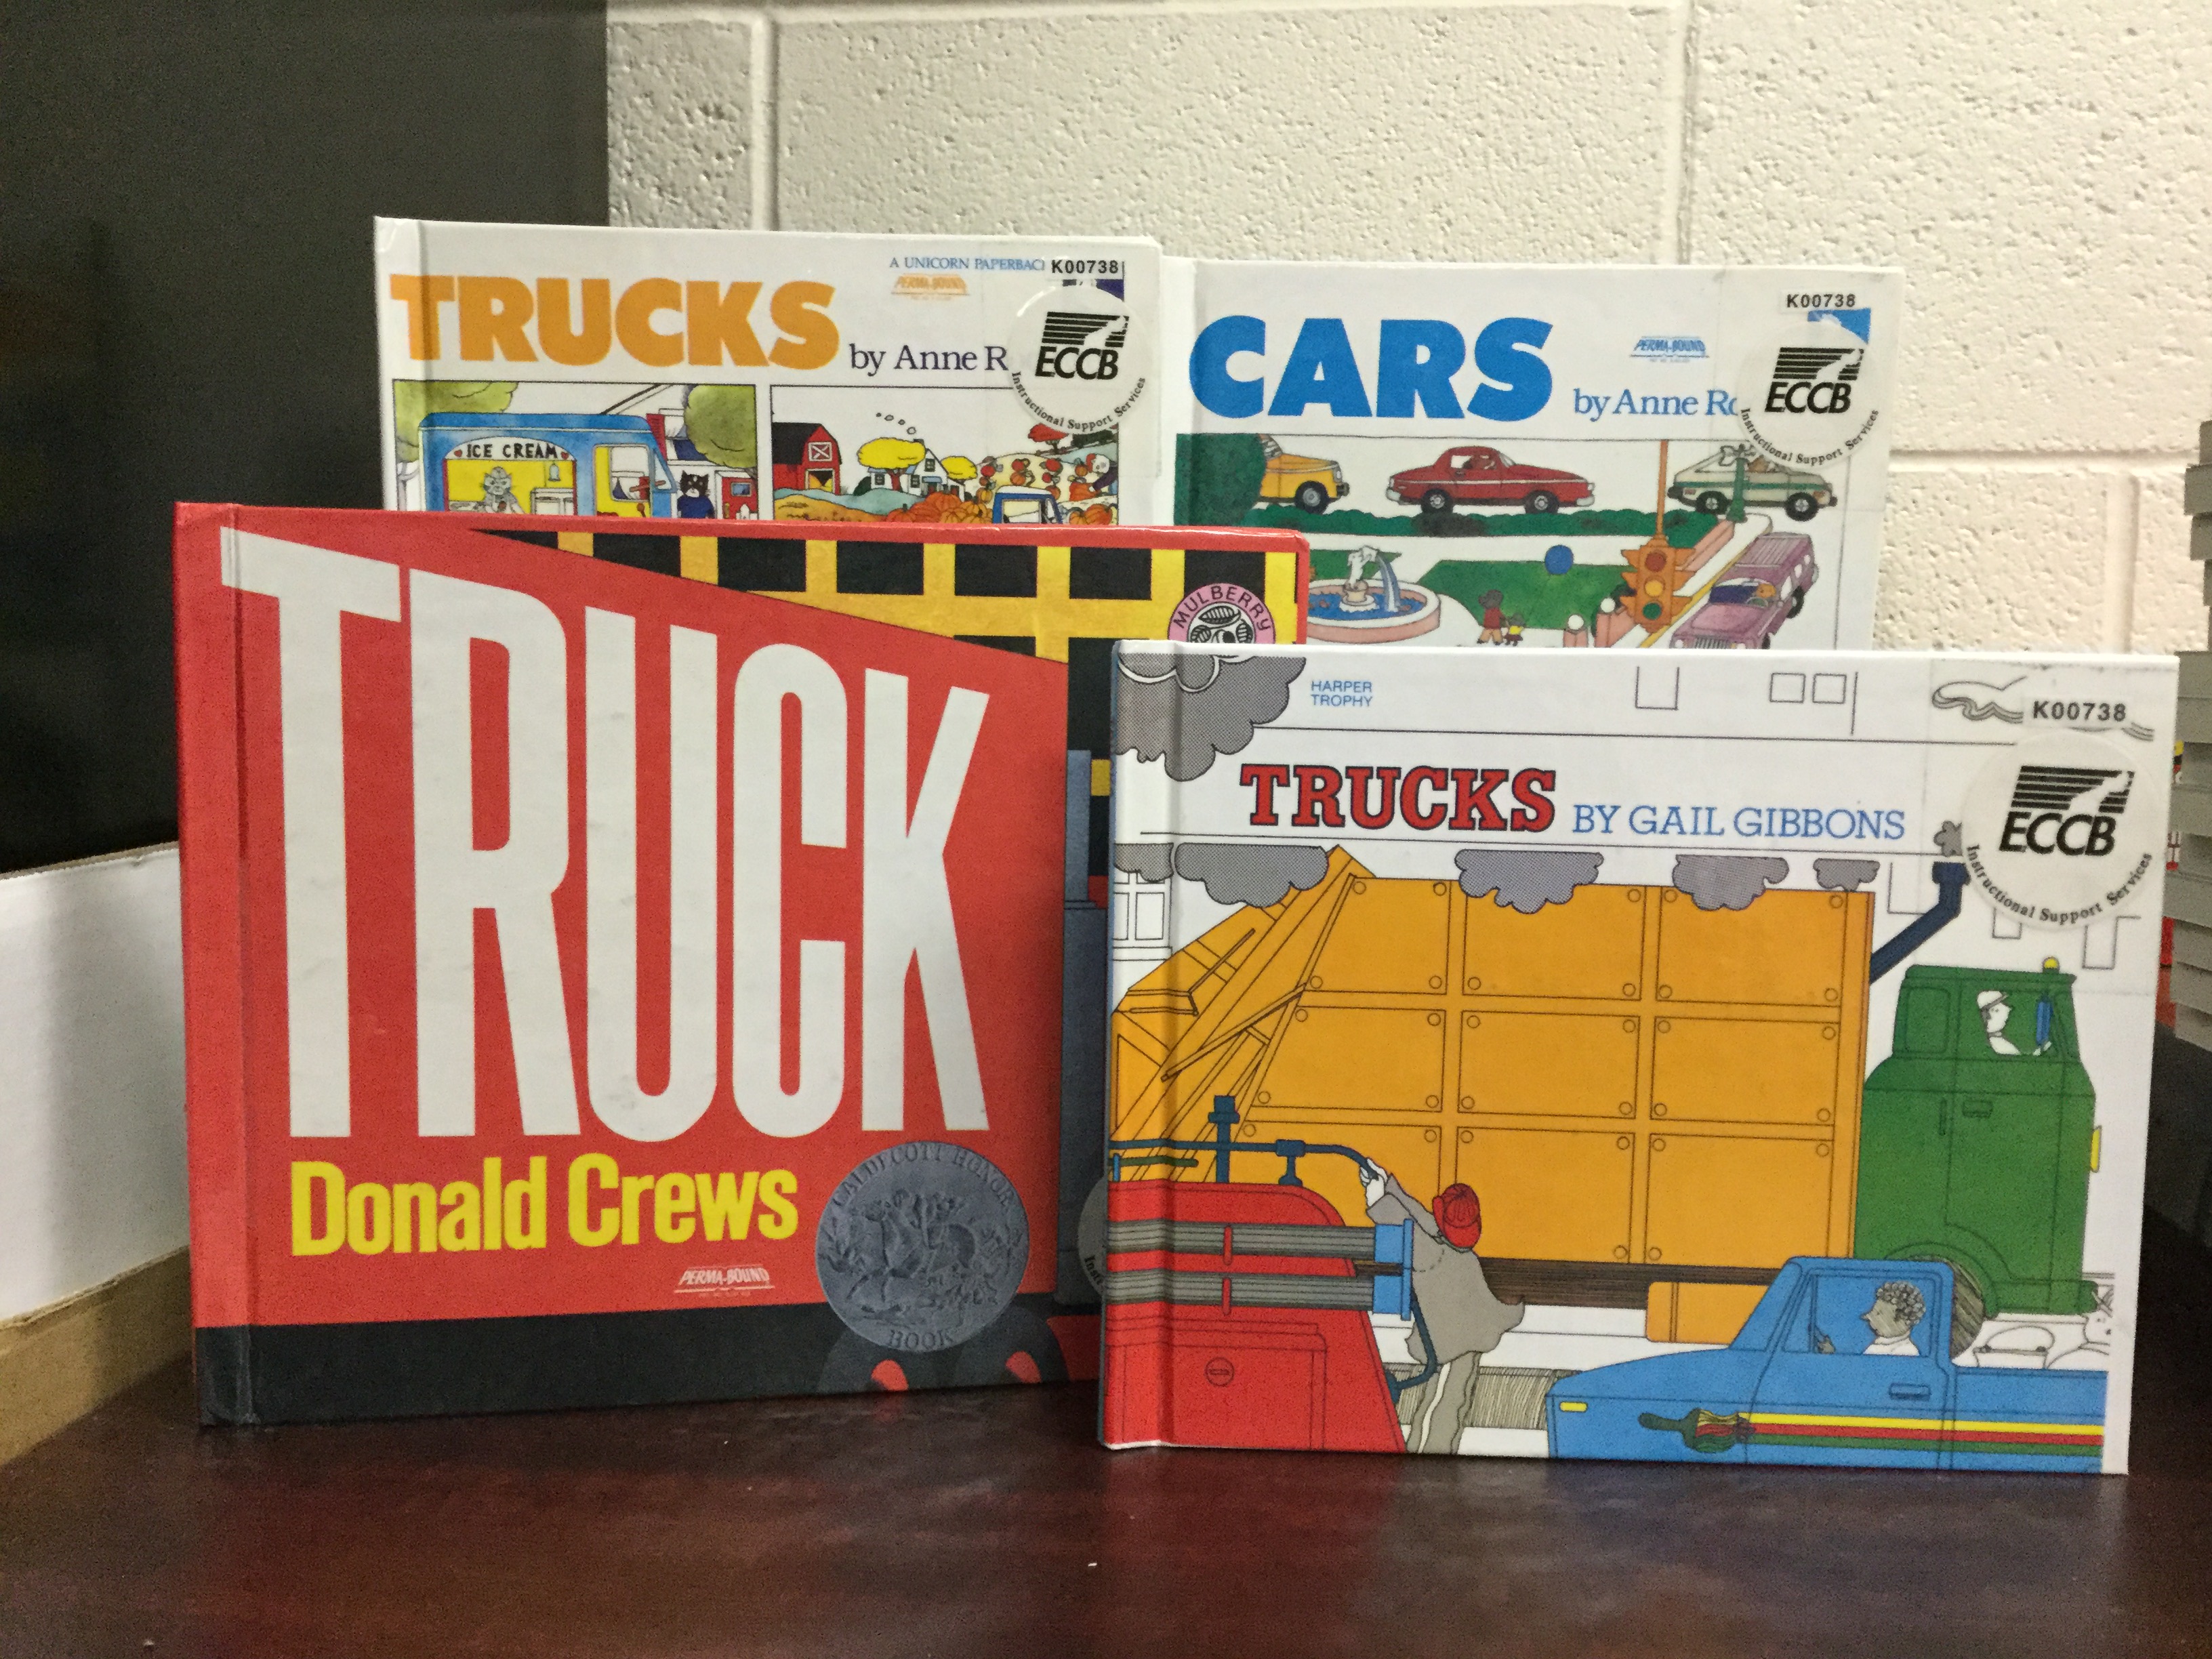 Trucks and Cars